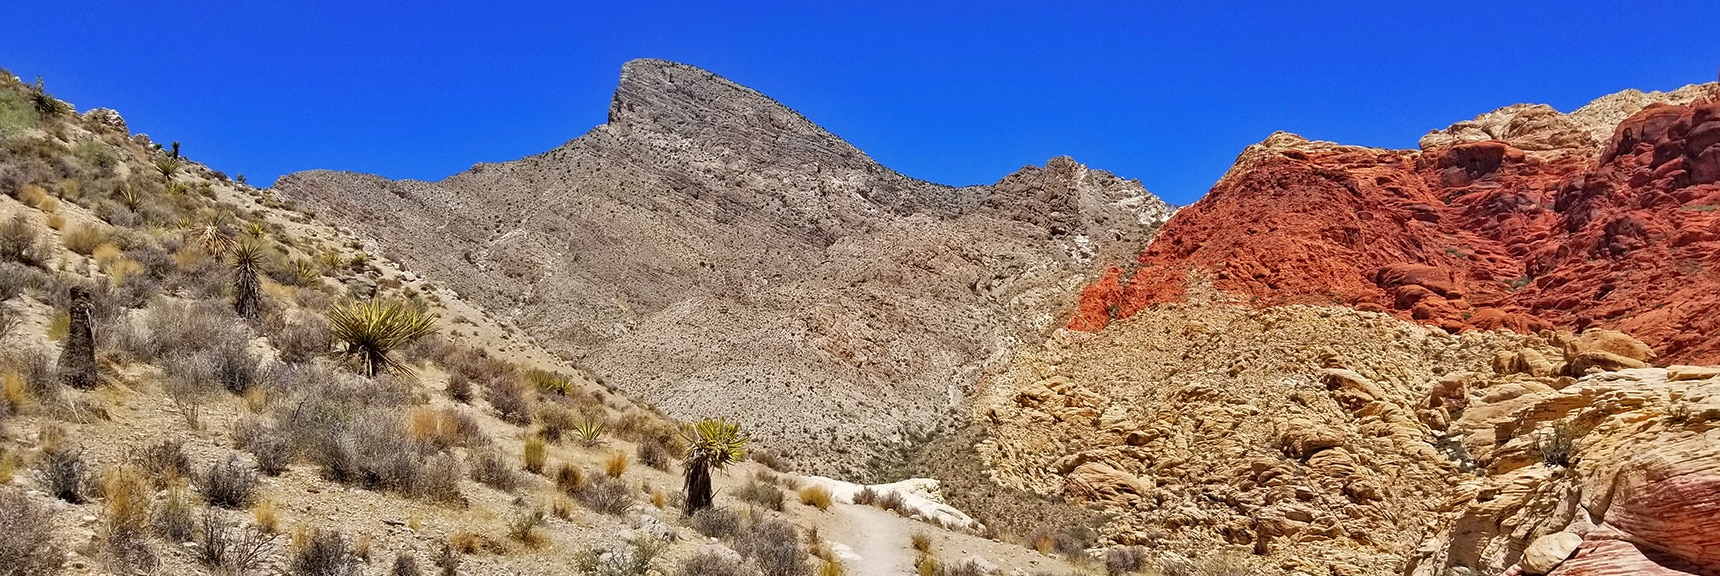 Looking Down the Kraft Mountain Loop Toward Turtlehead Peak | Kraft Mountain Loop | Calico Basin, Nevada